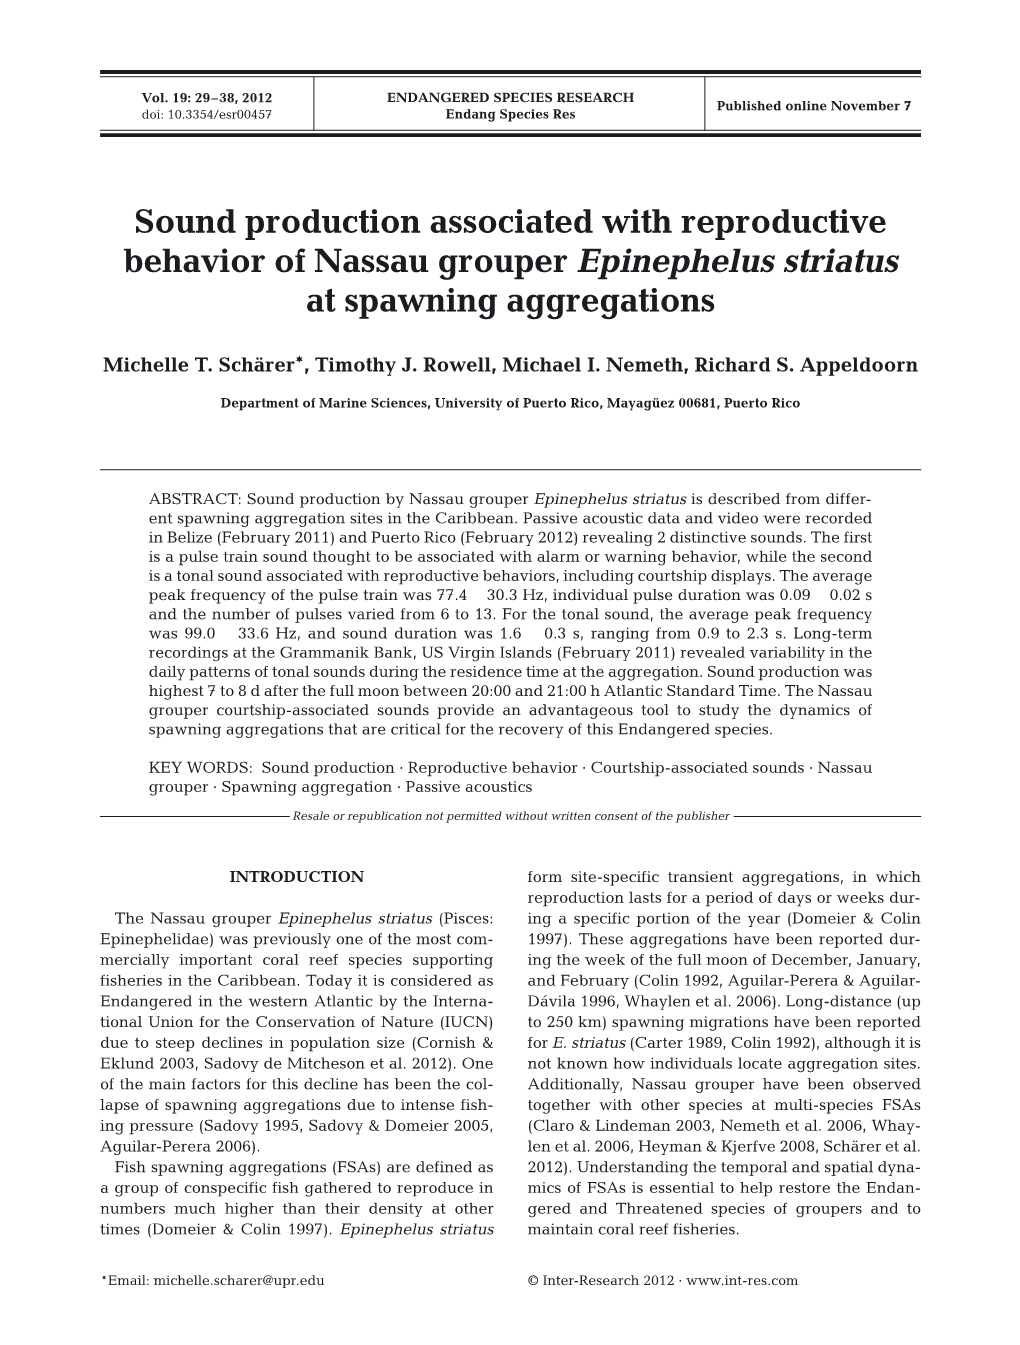 Sound Production Associated with Reproductive Behavior of Nassau Grouper Epinephelus Striatus at Spawning Aggregations